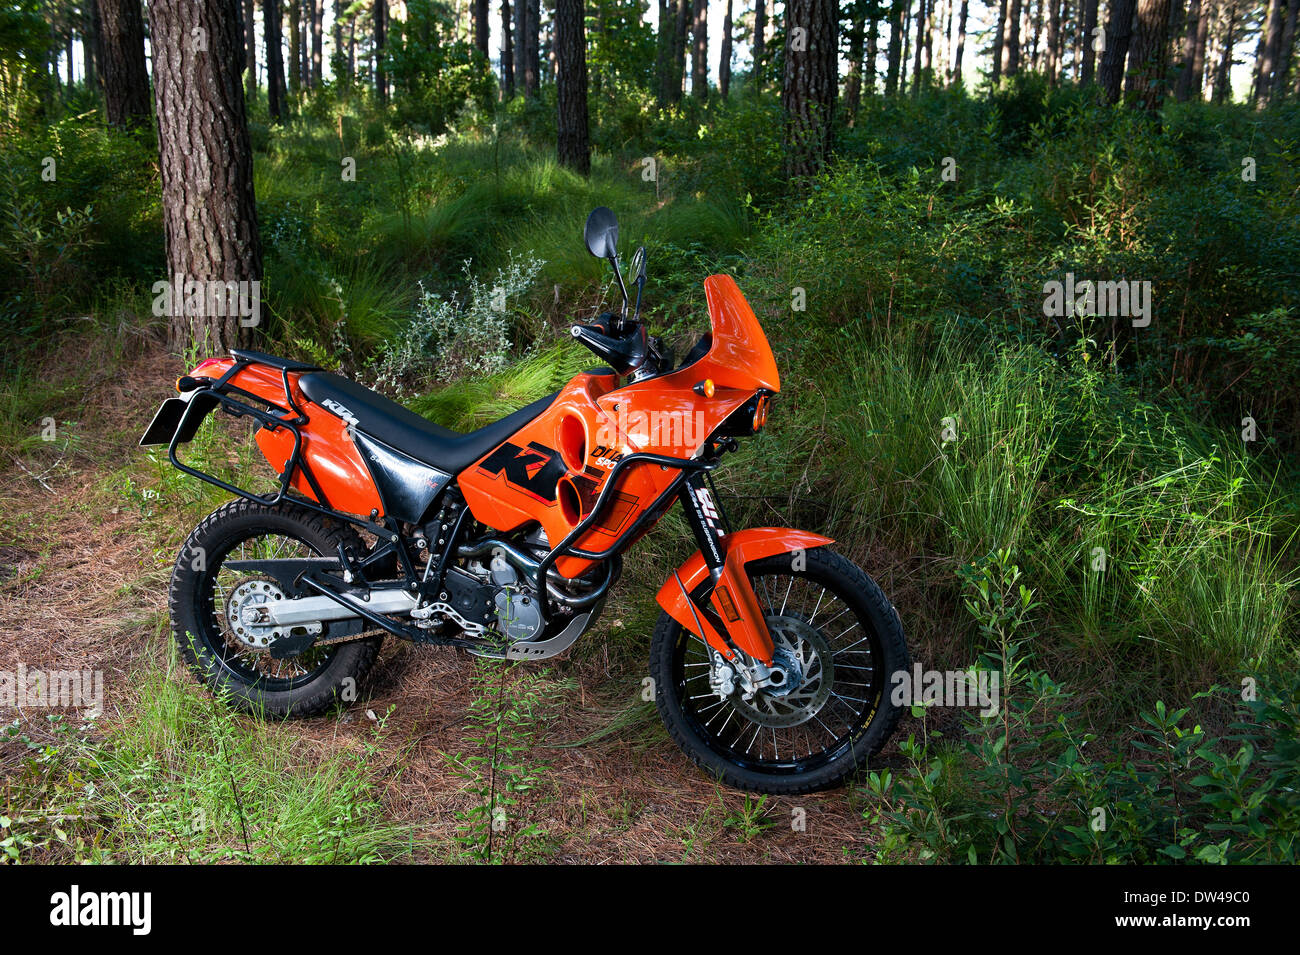 KTM 640 Adventure motorcycle, 2007 model. Stock Photo